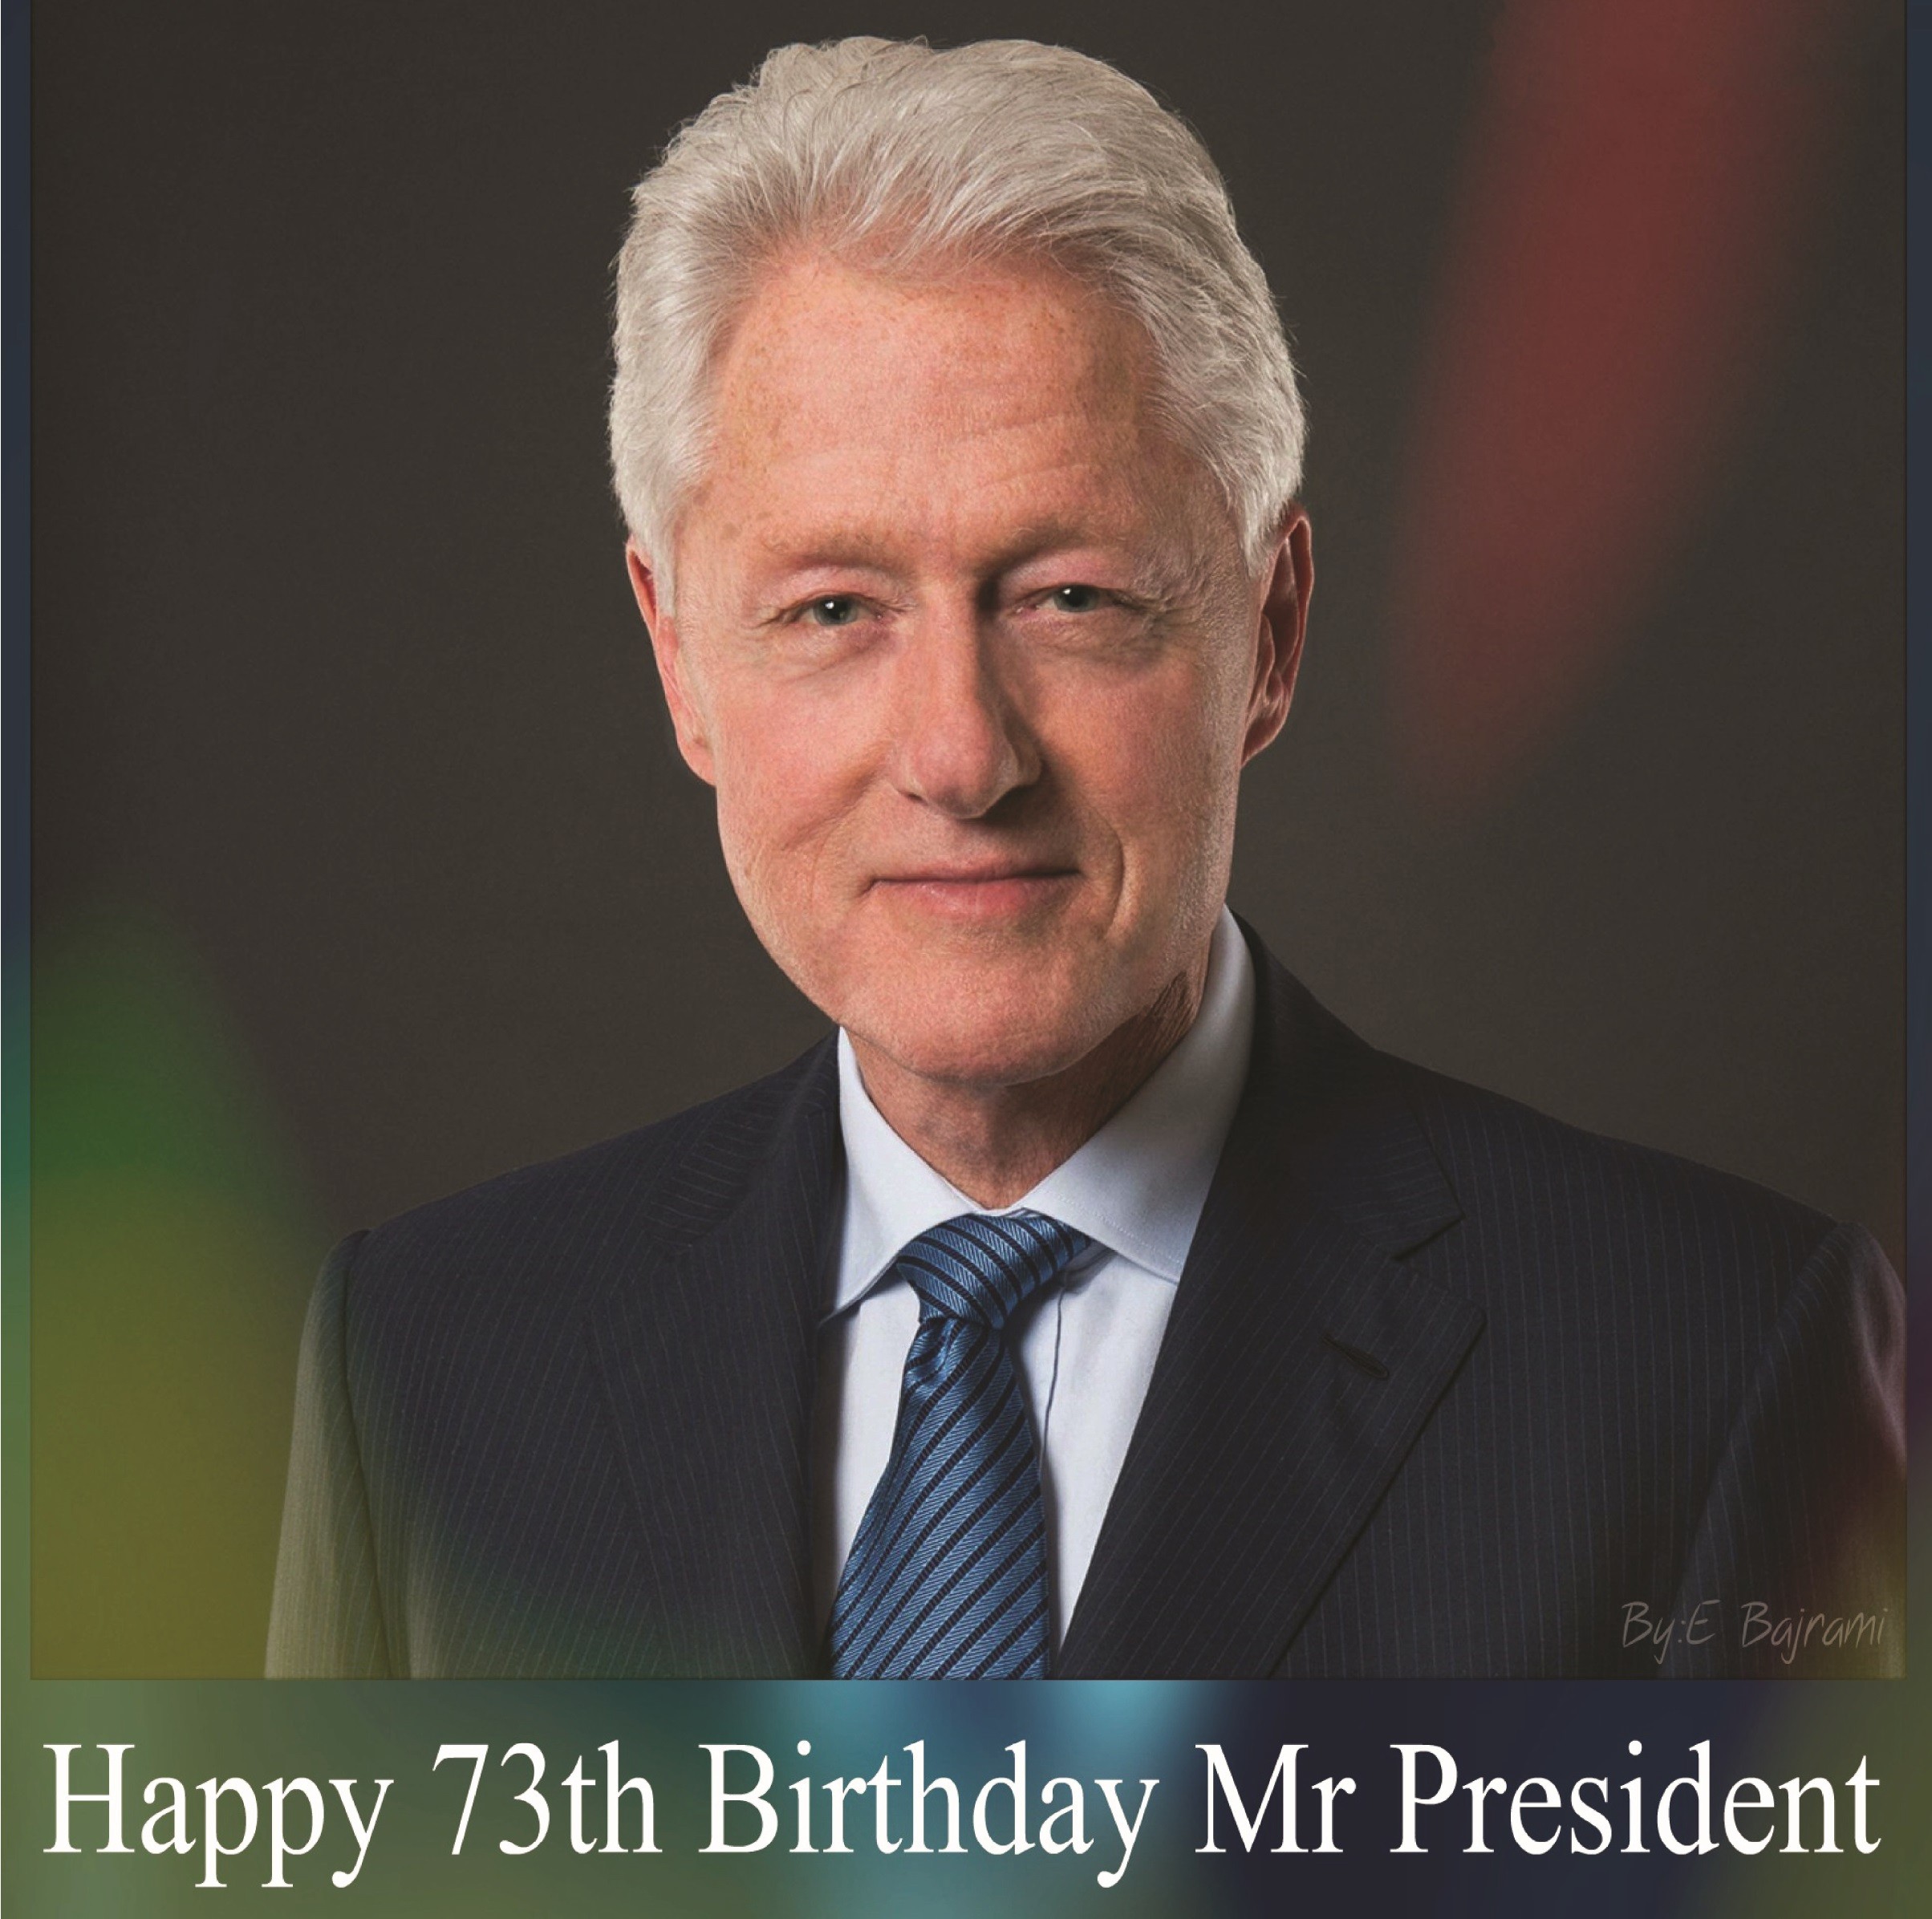 Kosova feston ditëlindjen e ish presidentit Bill Clinton